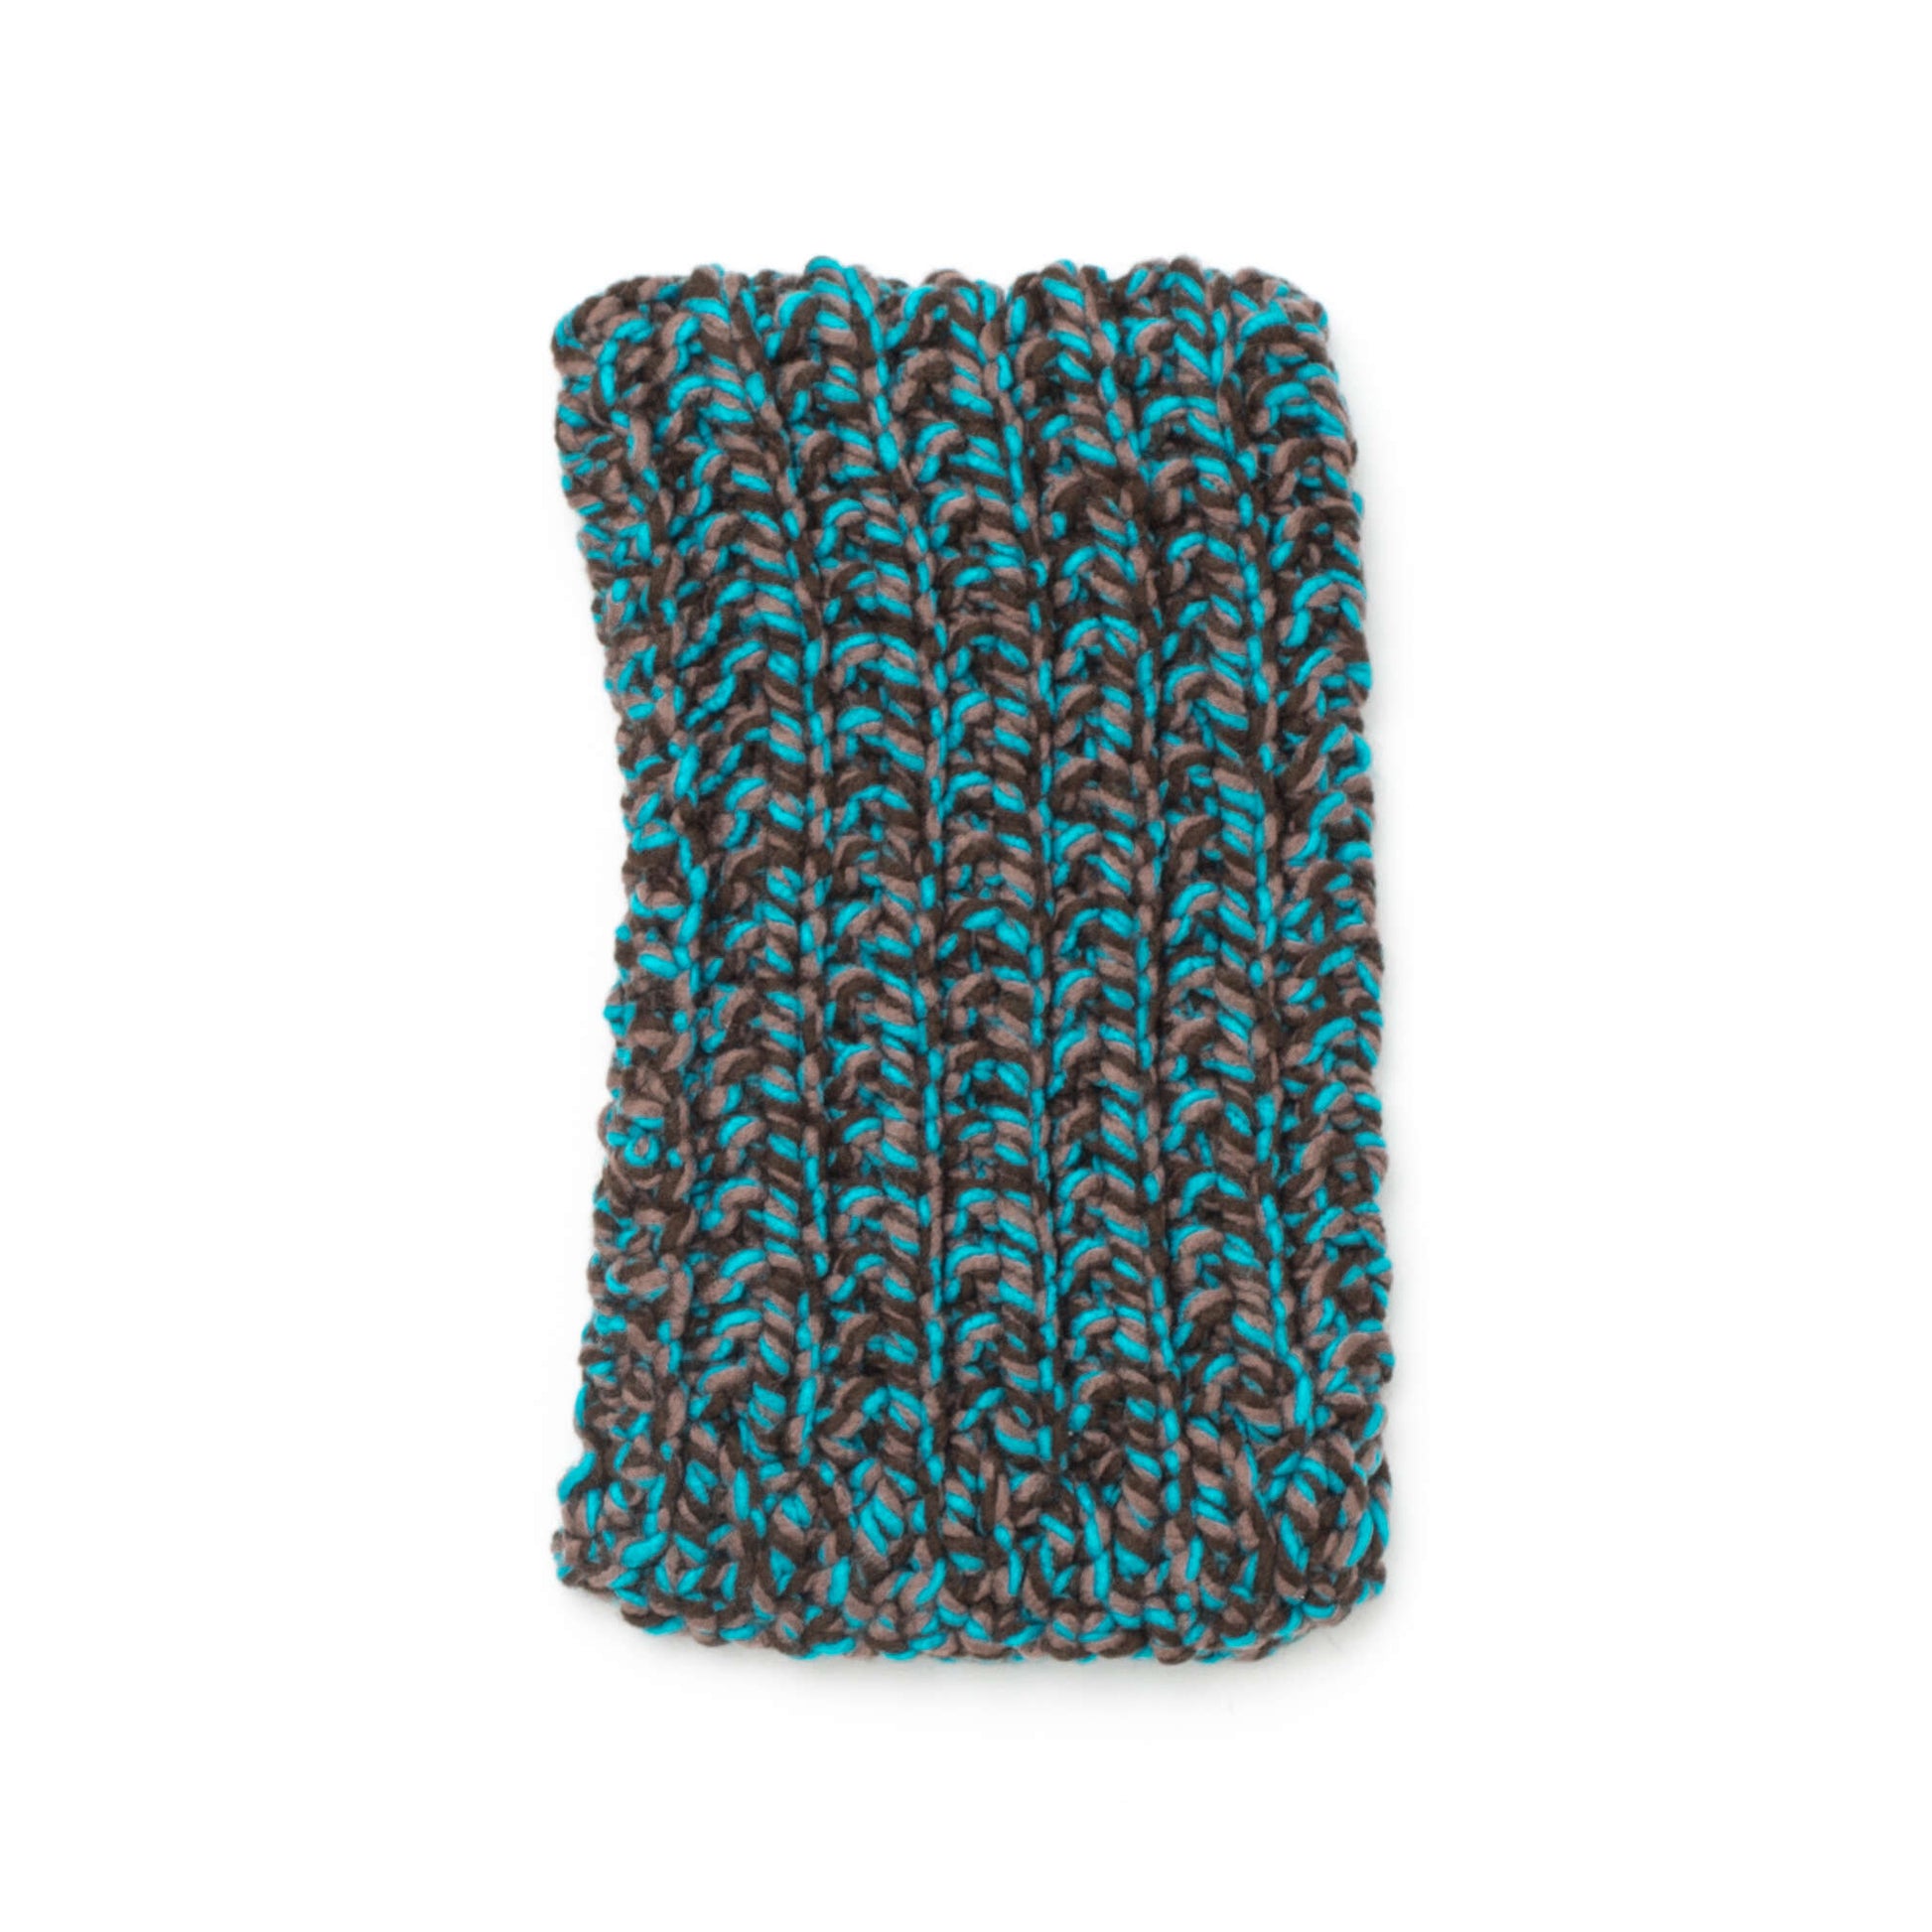 Bernat Icover Knit Accessory made in Bernat Softee Chunky yarn